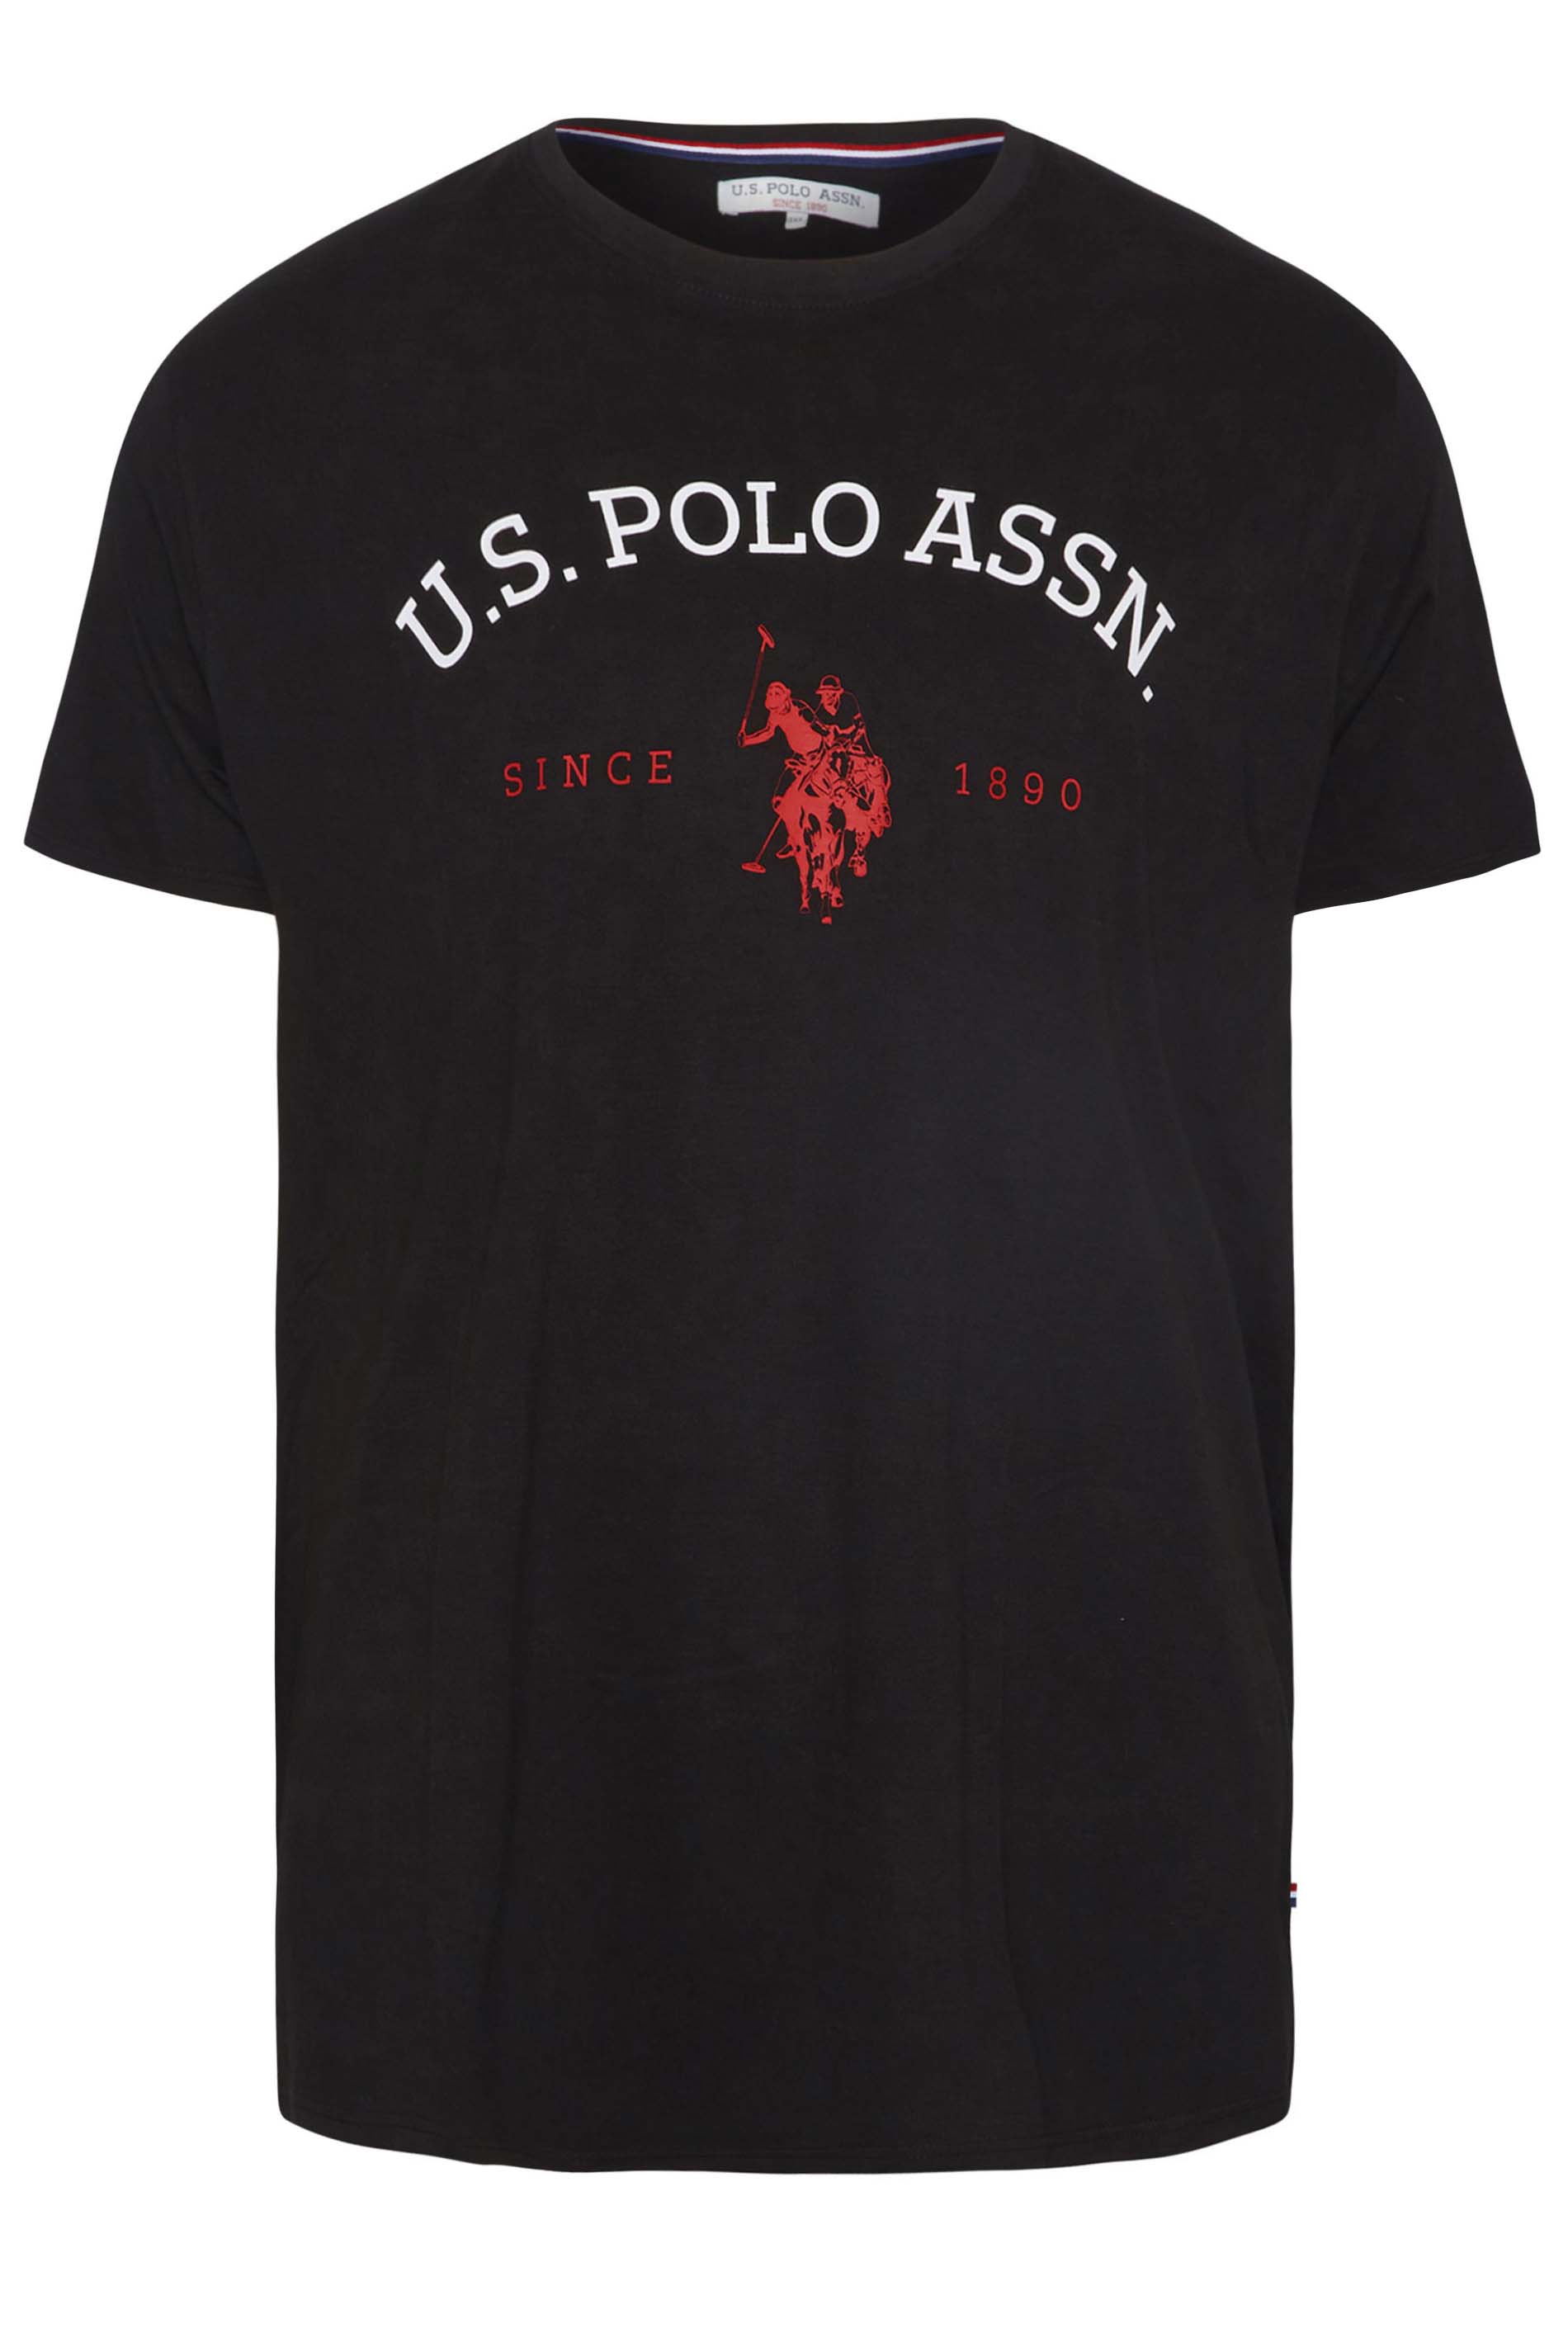 U.S. POLO ASSN. Black Graphic Logo T-Shirt | BadRhino 3